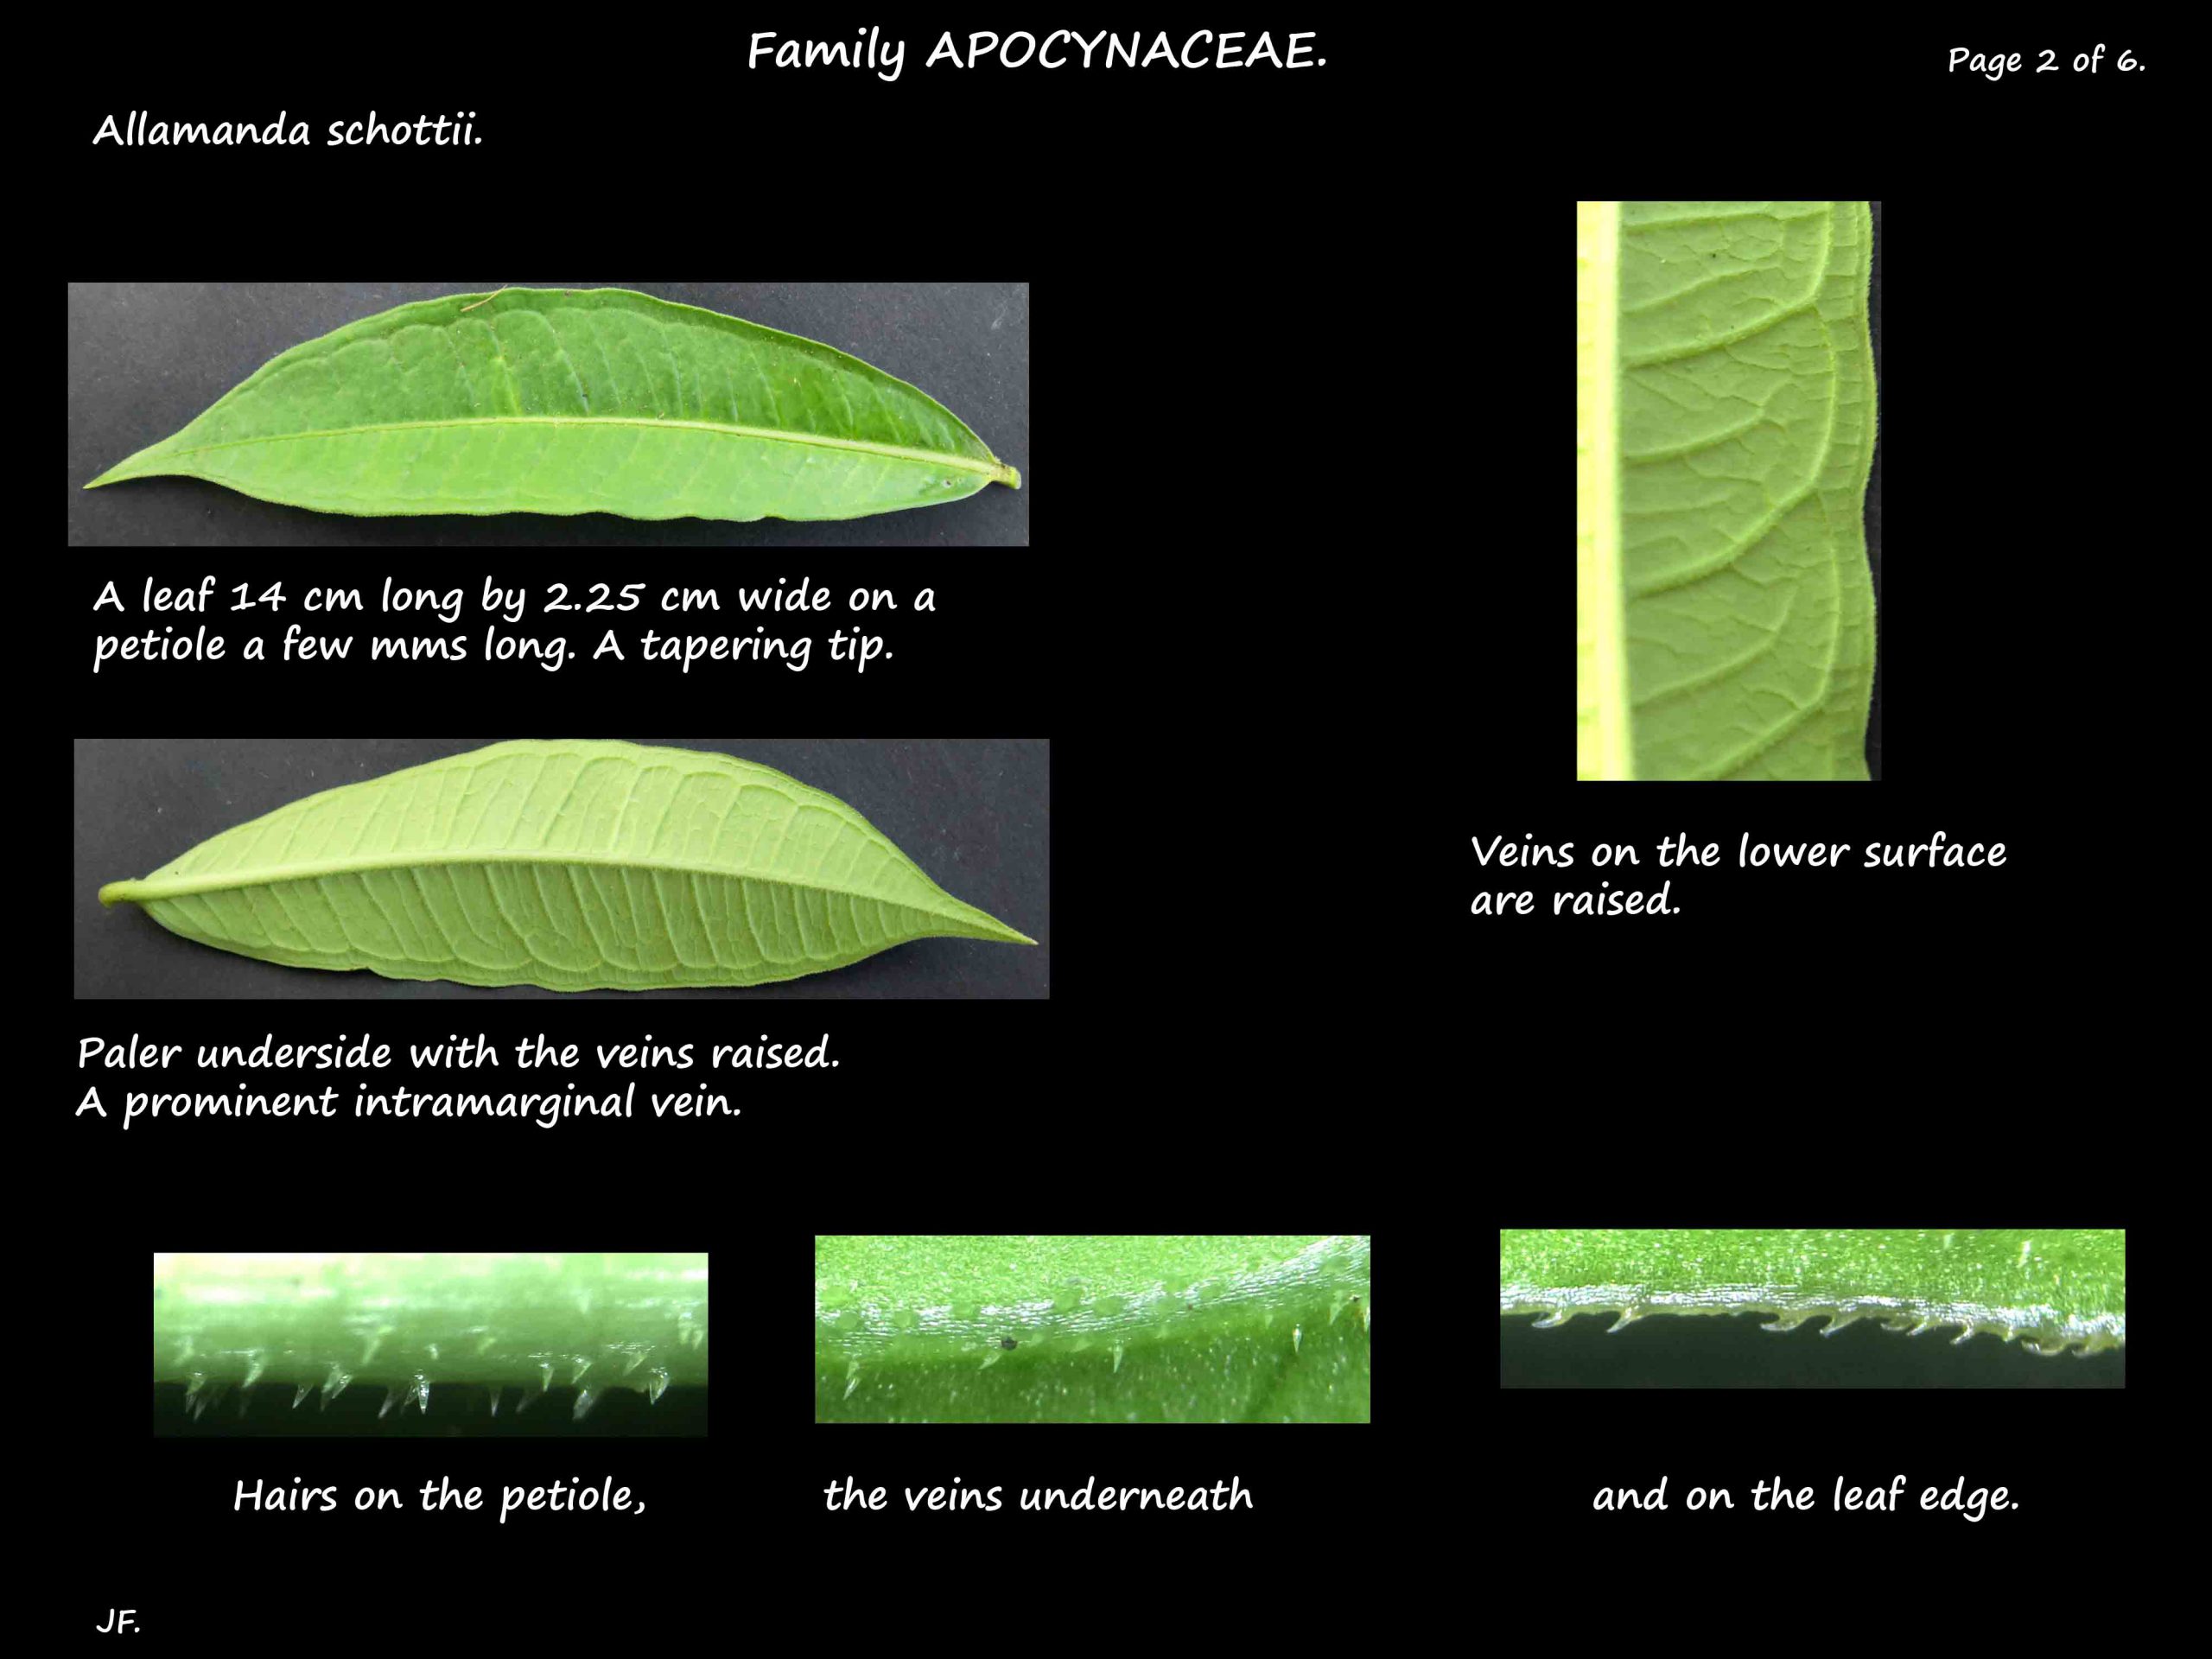 2 Allamanda schottii leaves & leaf hairs